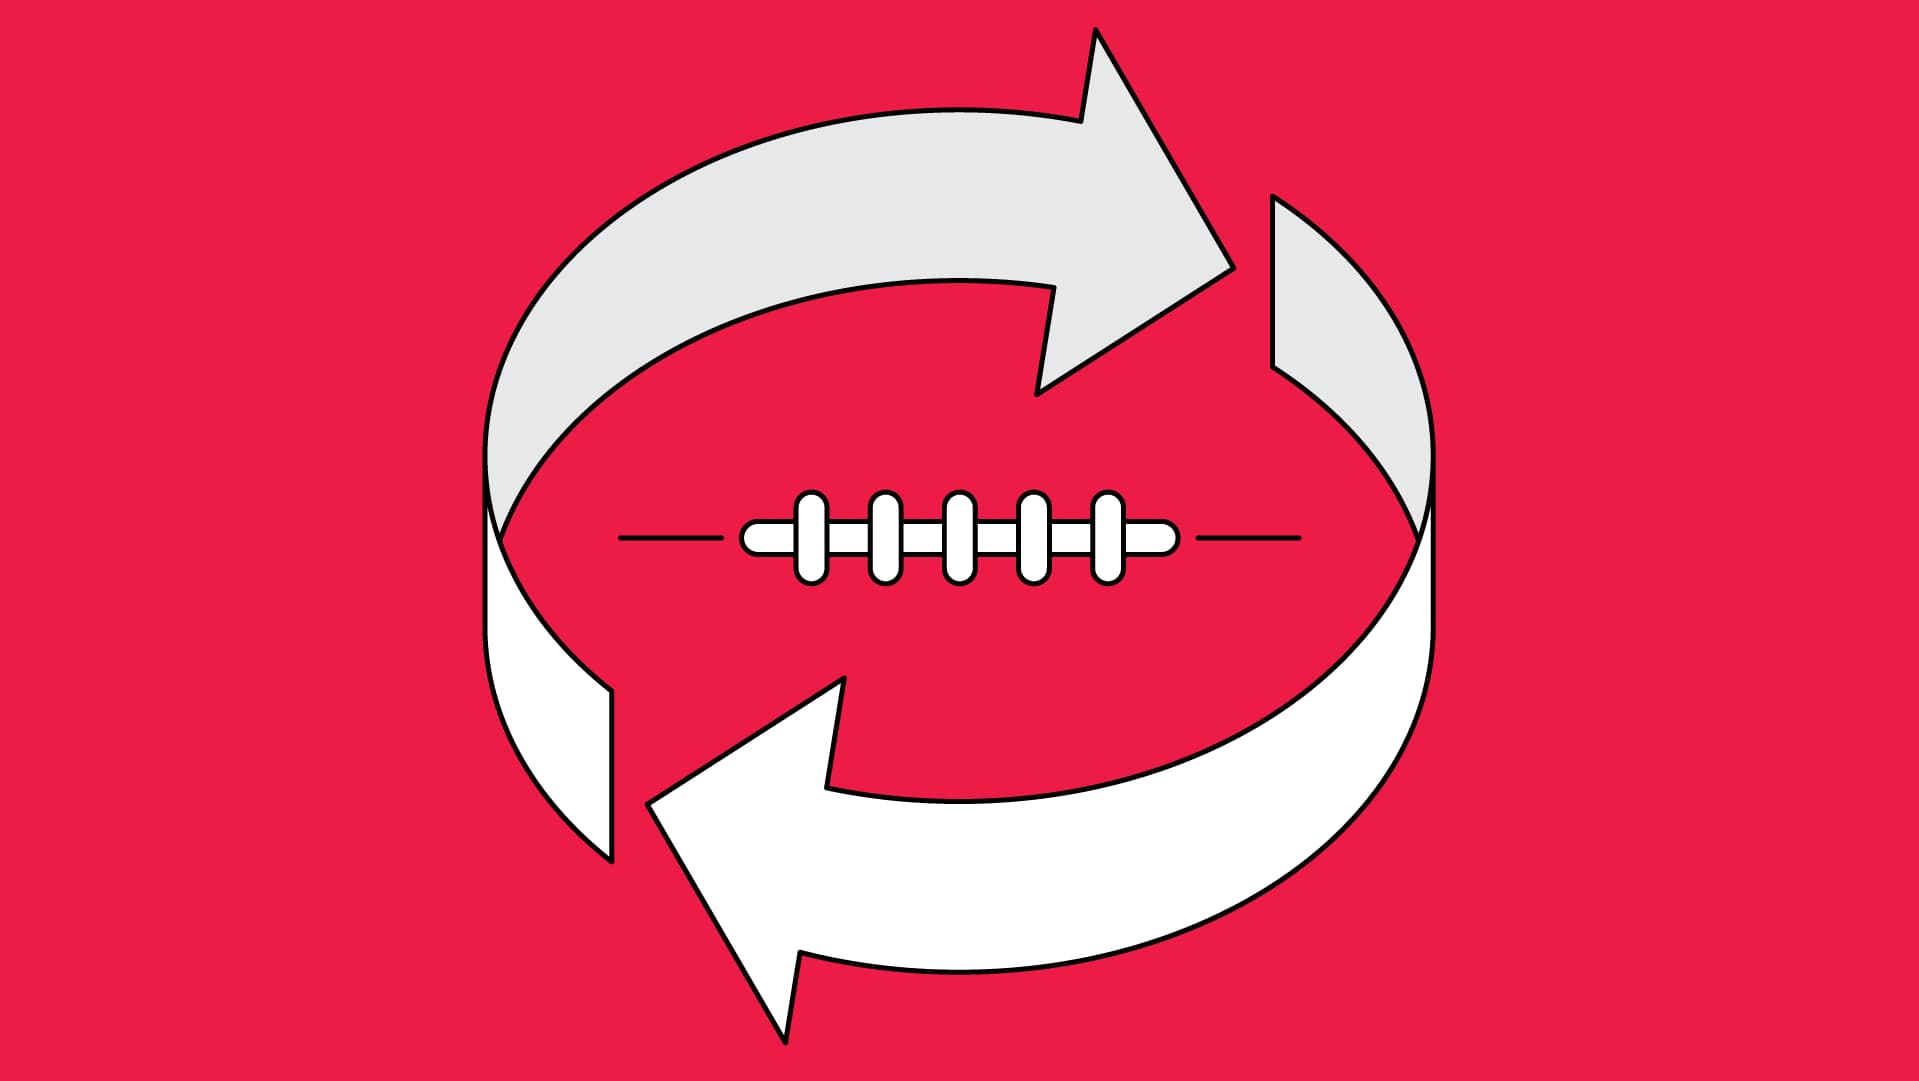 Football/recycle symbol illustration